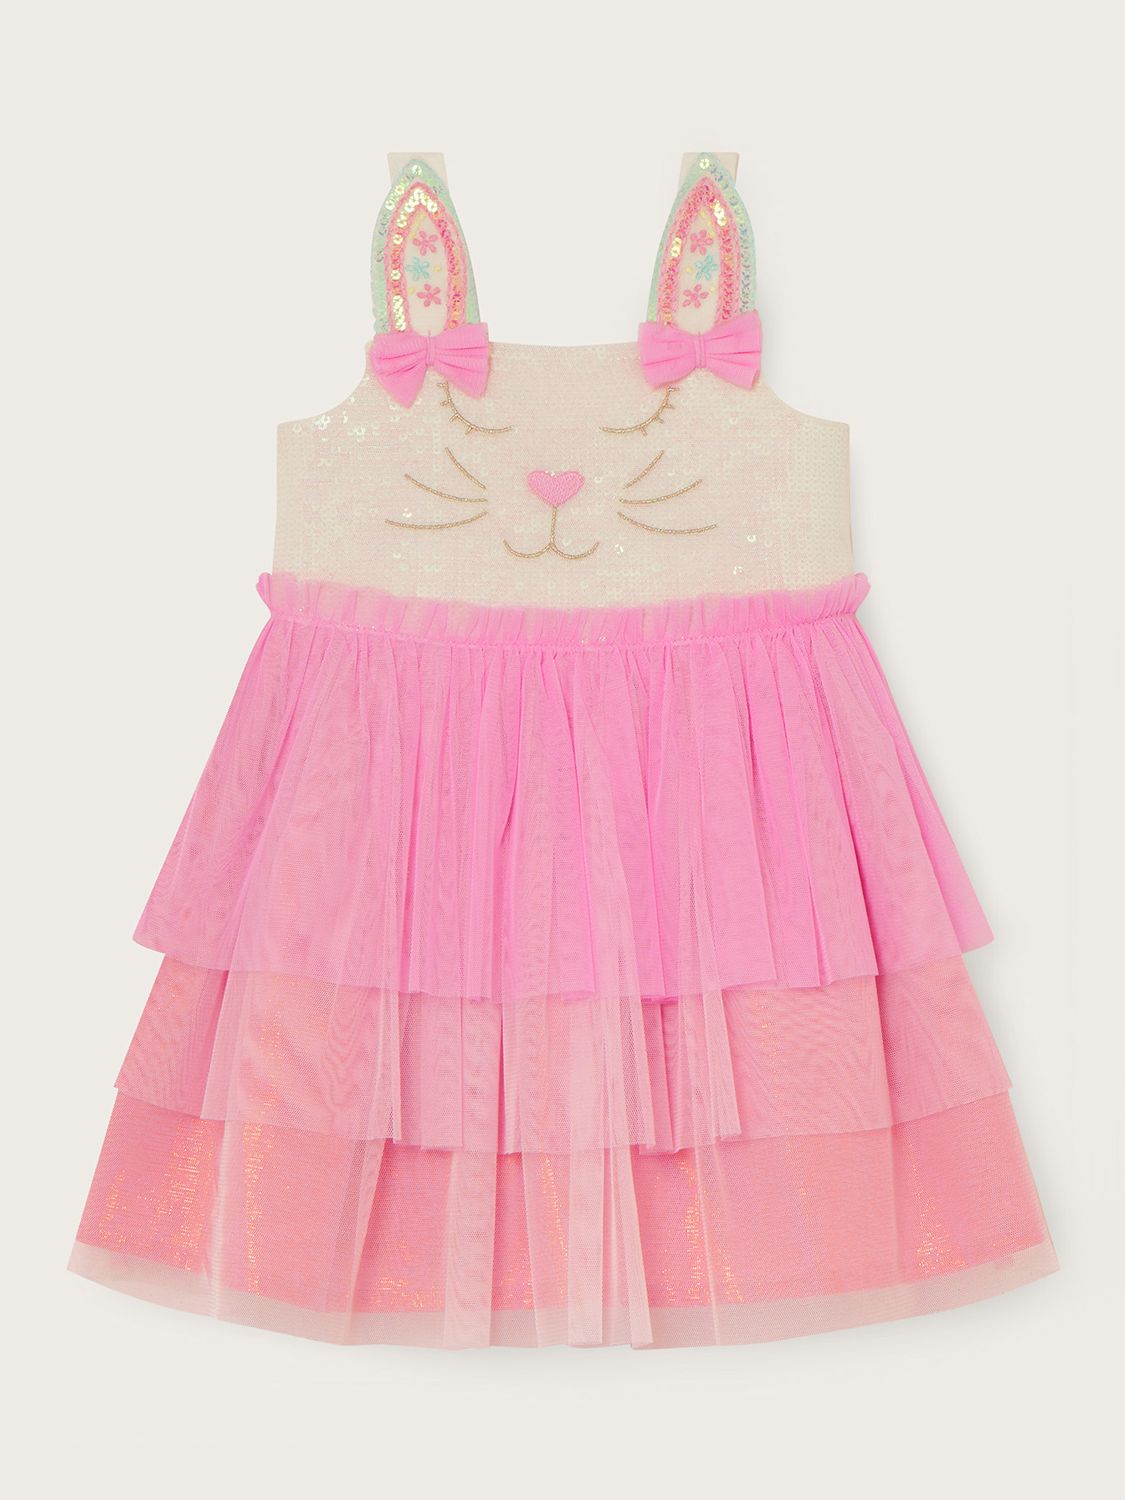 Monsoon Baby Novelty Bunny Disco Party Dress, Pink/Multi